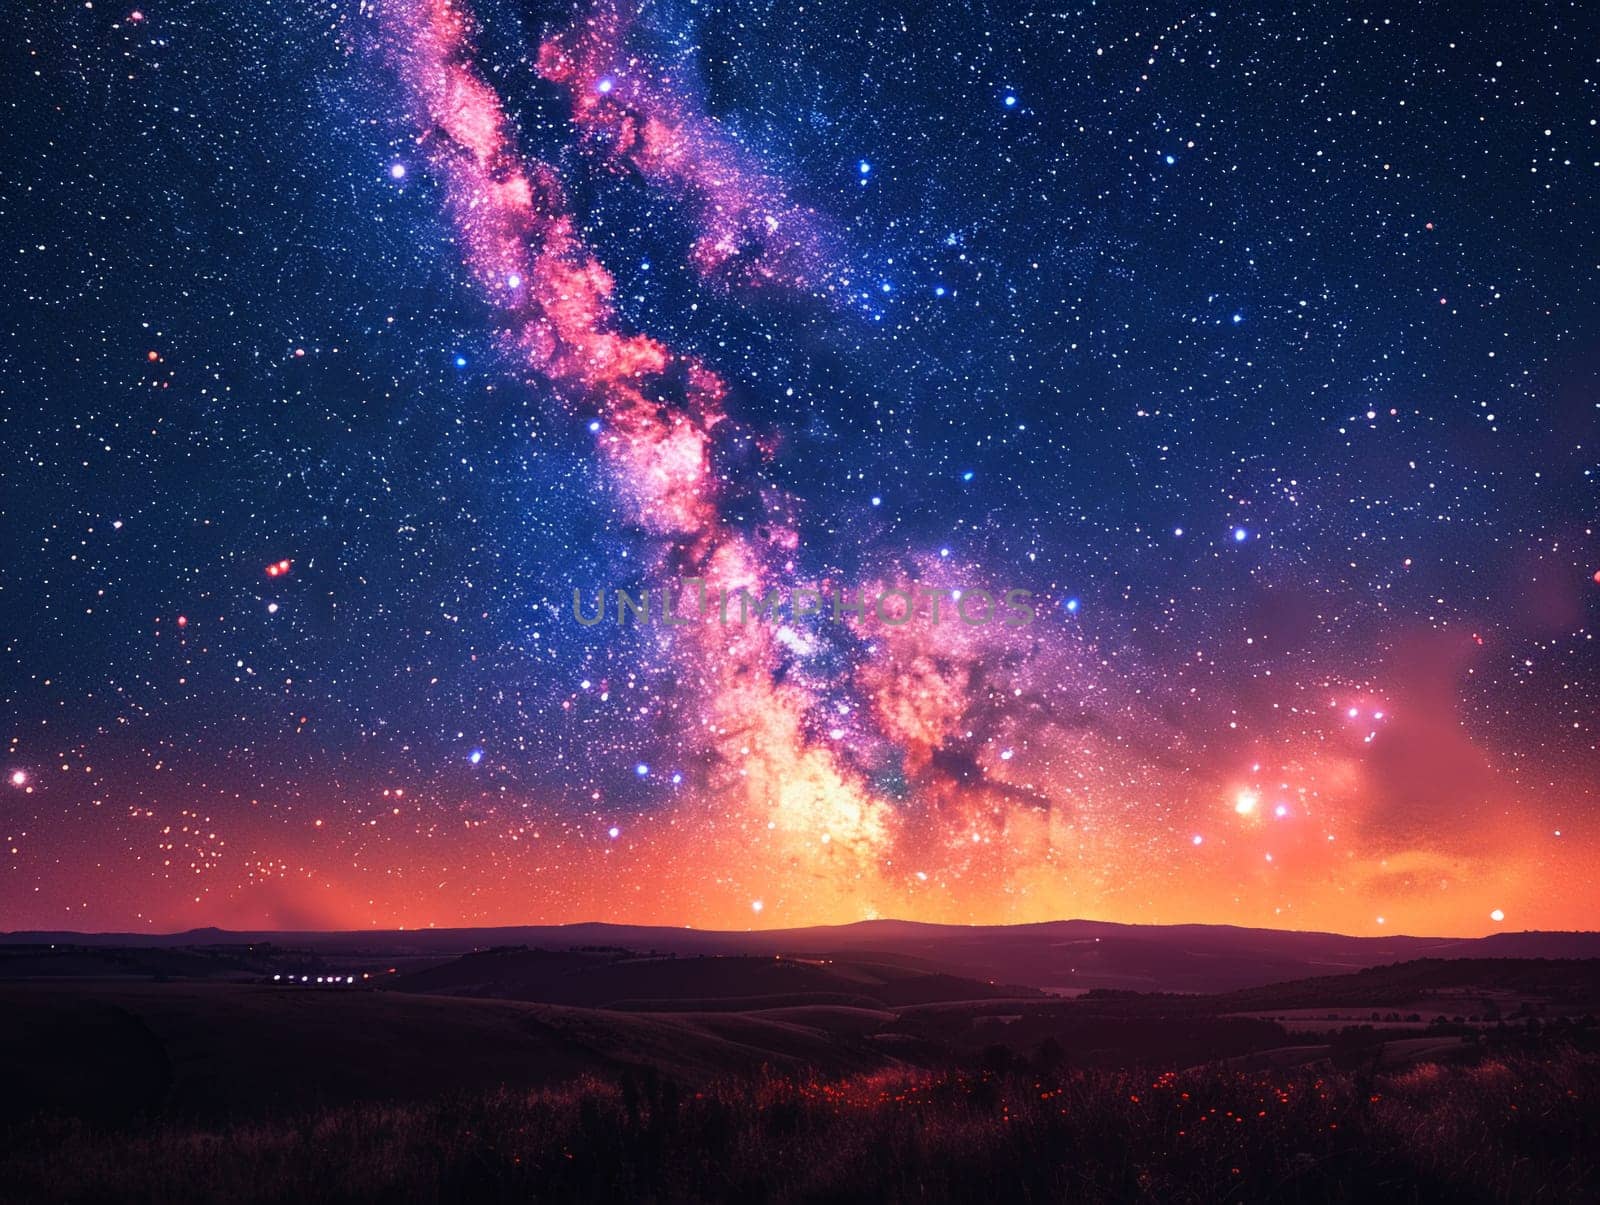 Panoramic night sky with Milky Way, inspiring awe and exploration.